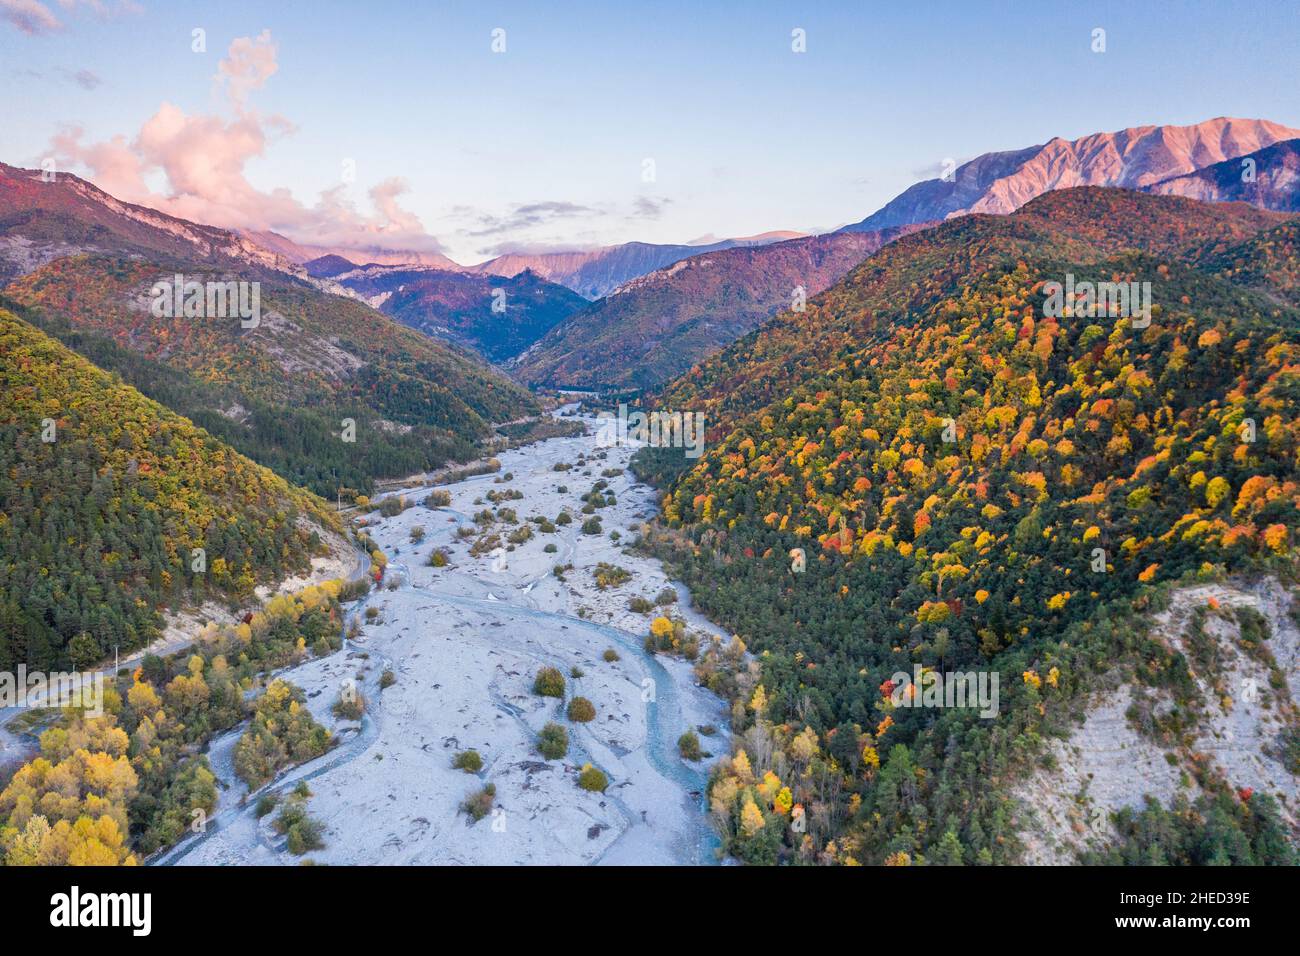 France, Alpes de Haute Provence, Reserve naturelle geologique de Haute Provence (Haute Provence Geological Natural Reserve), La Javie, high valley of Stock Photo